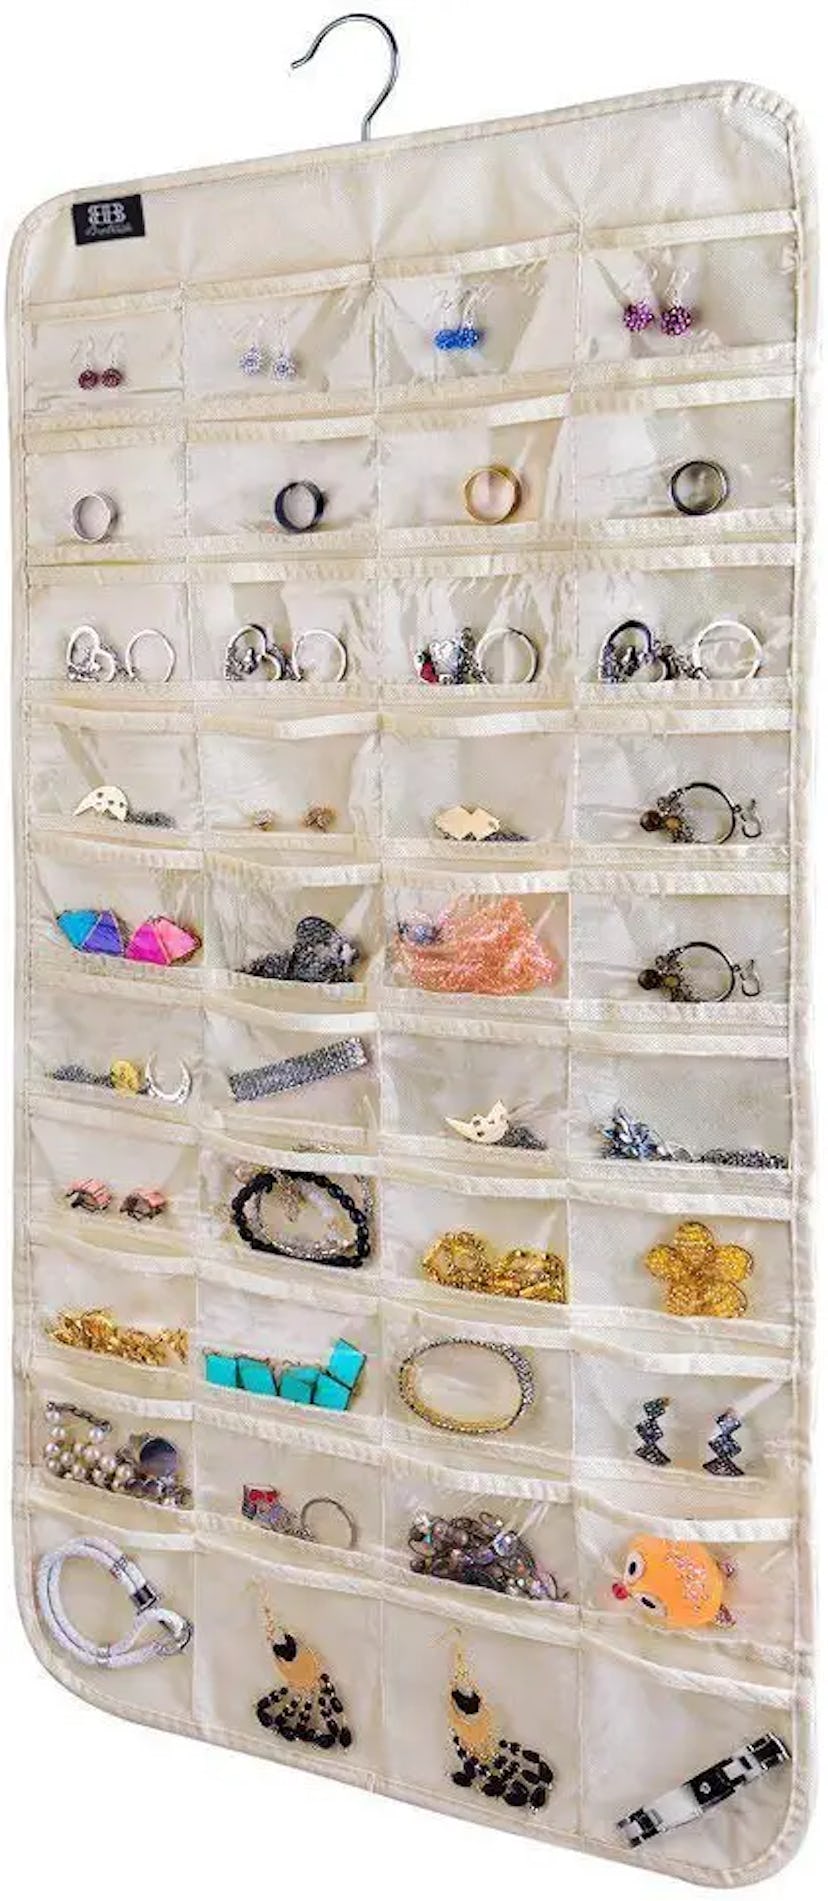 BB Brotrade hanging jewelry organizer, a jewelry box alternative on Amazon